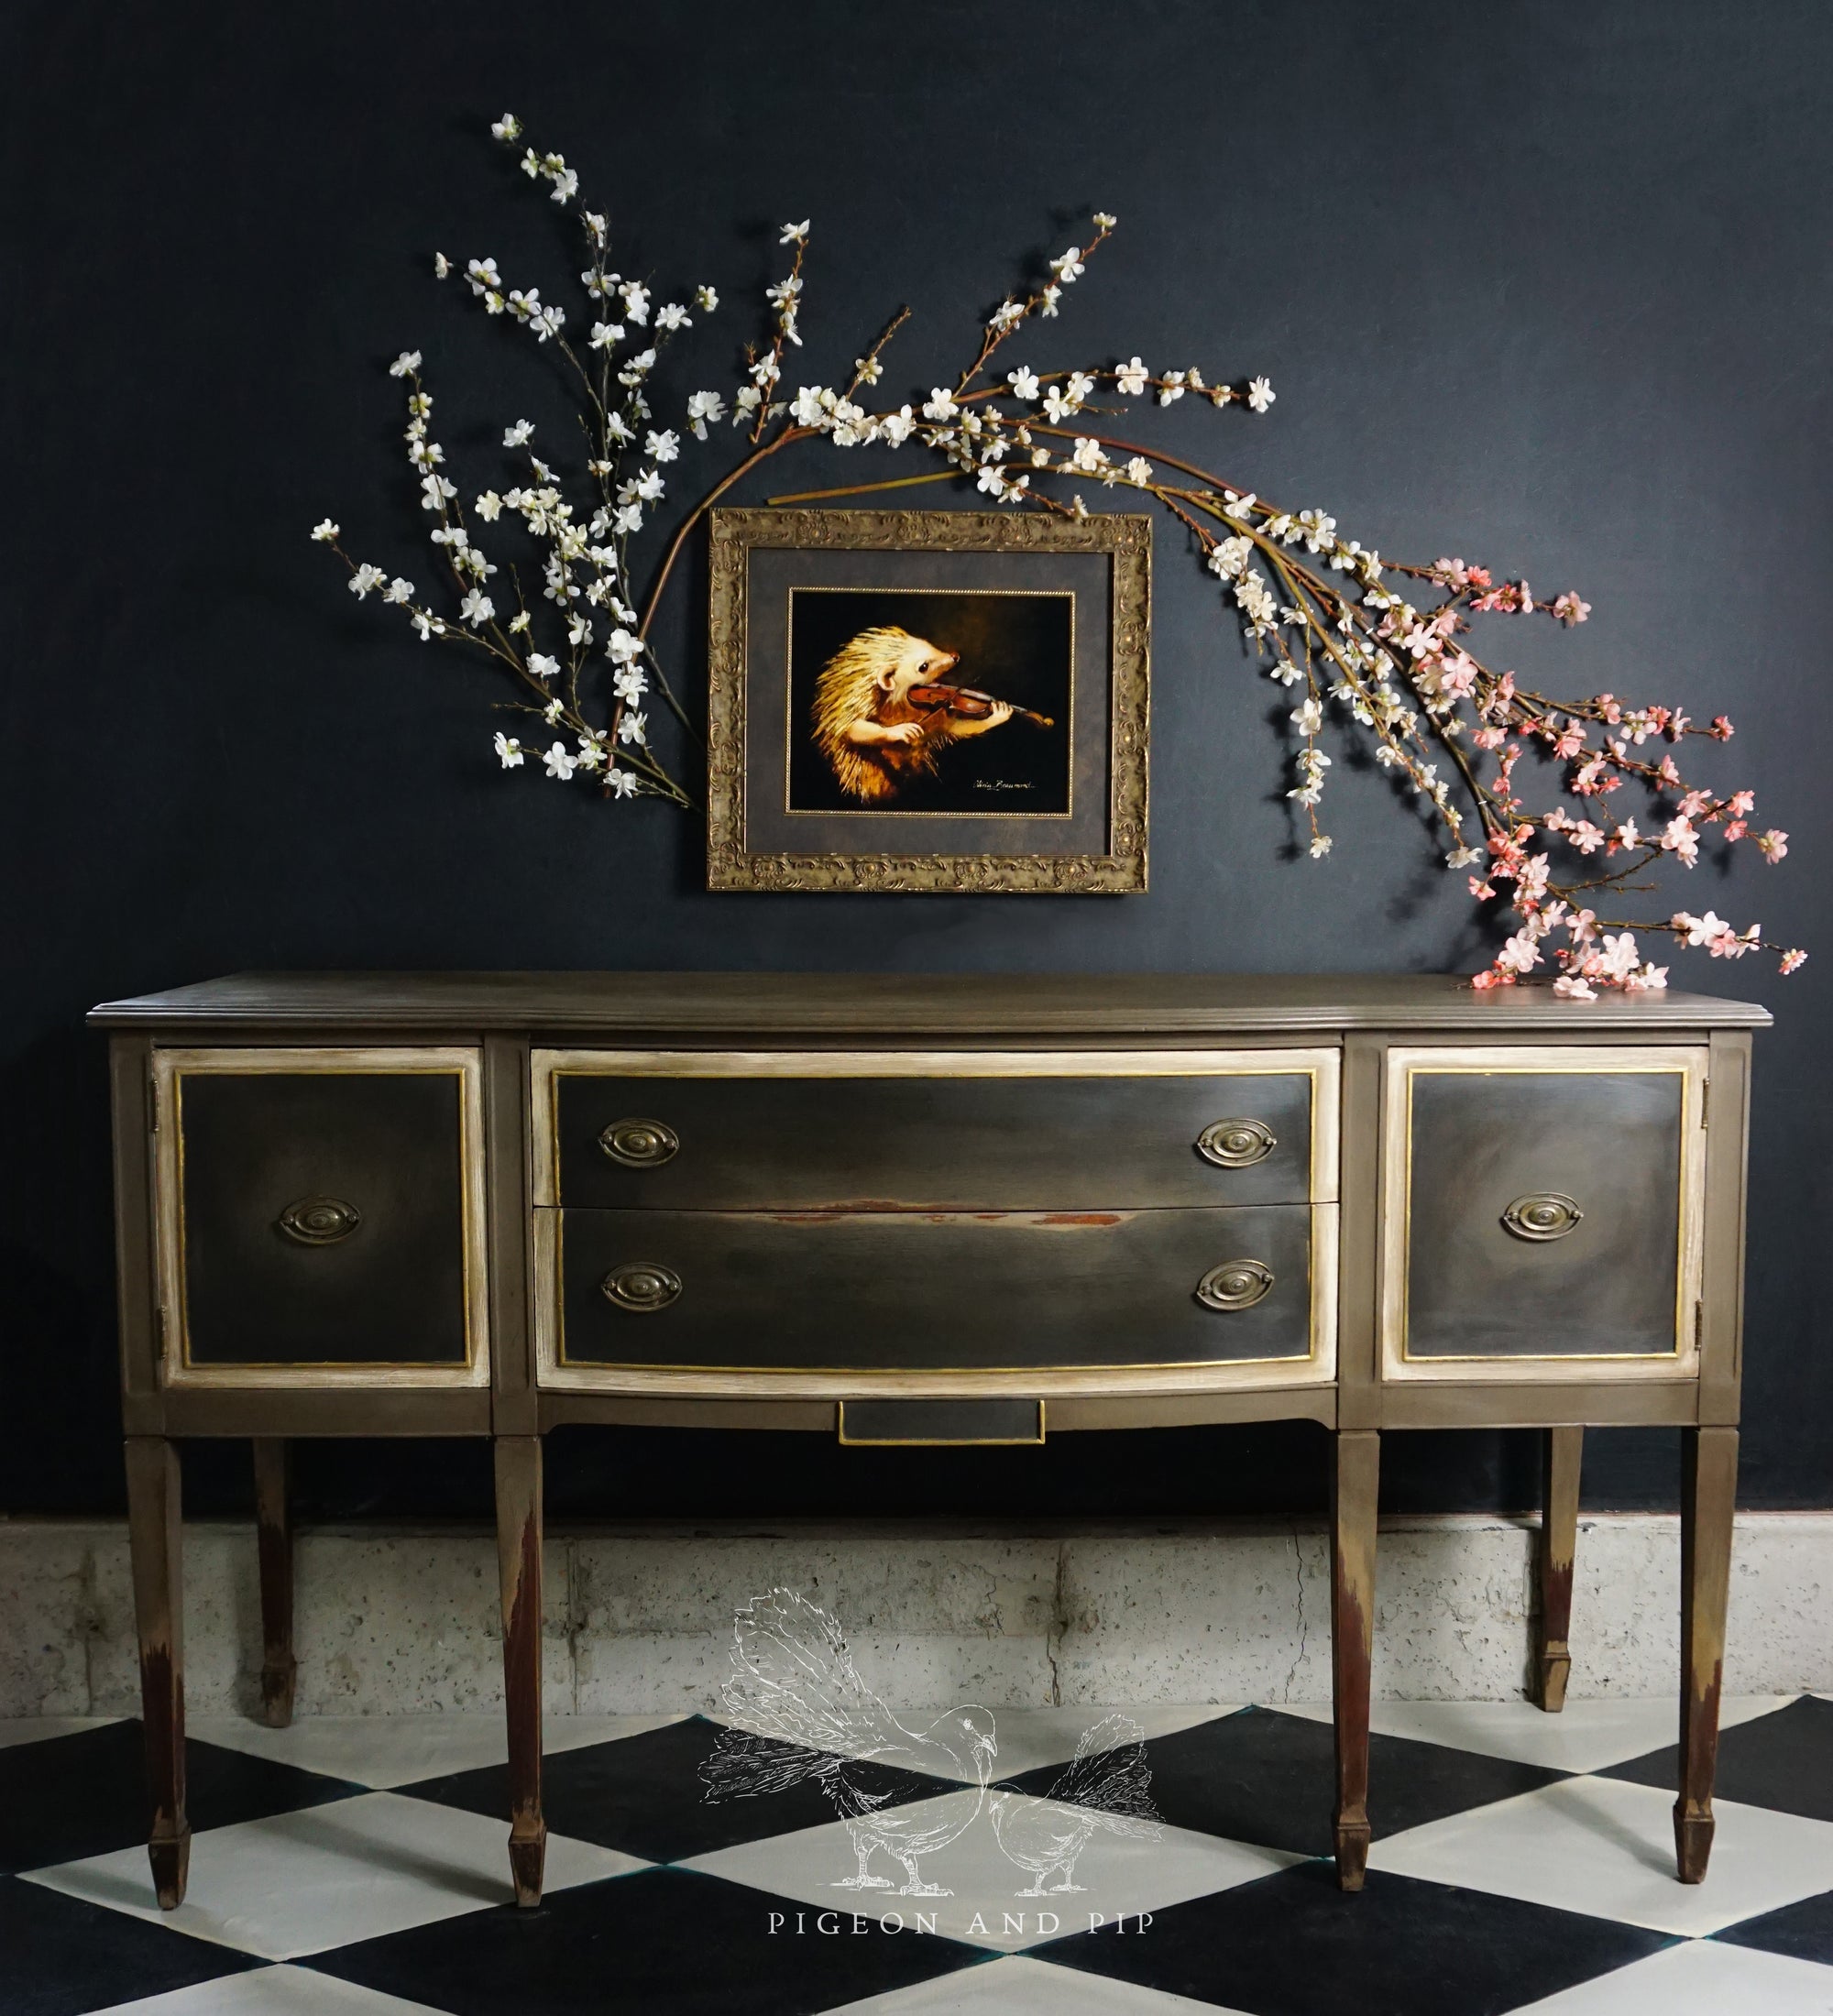 The painting of "Serenade" inspired the deep velvety dark colors in this vintage sideboard.  